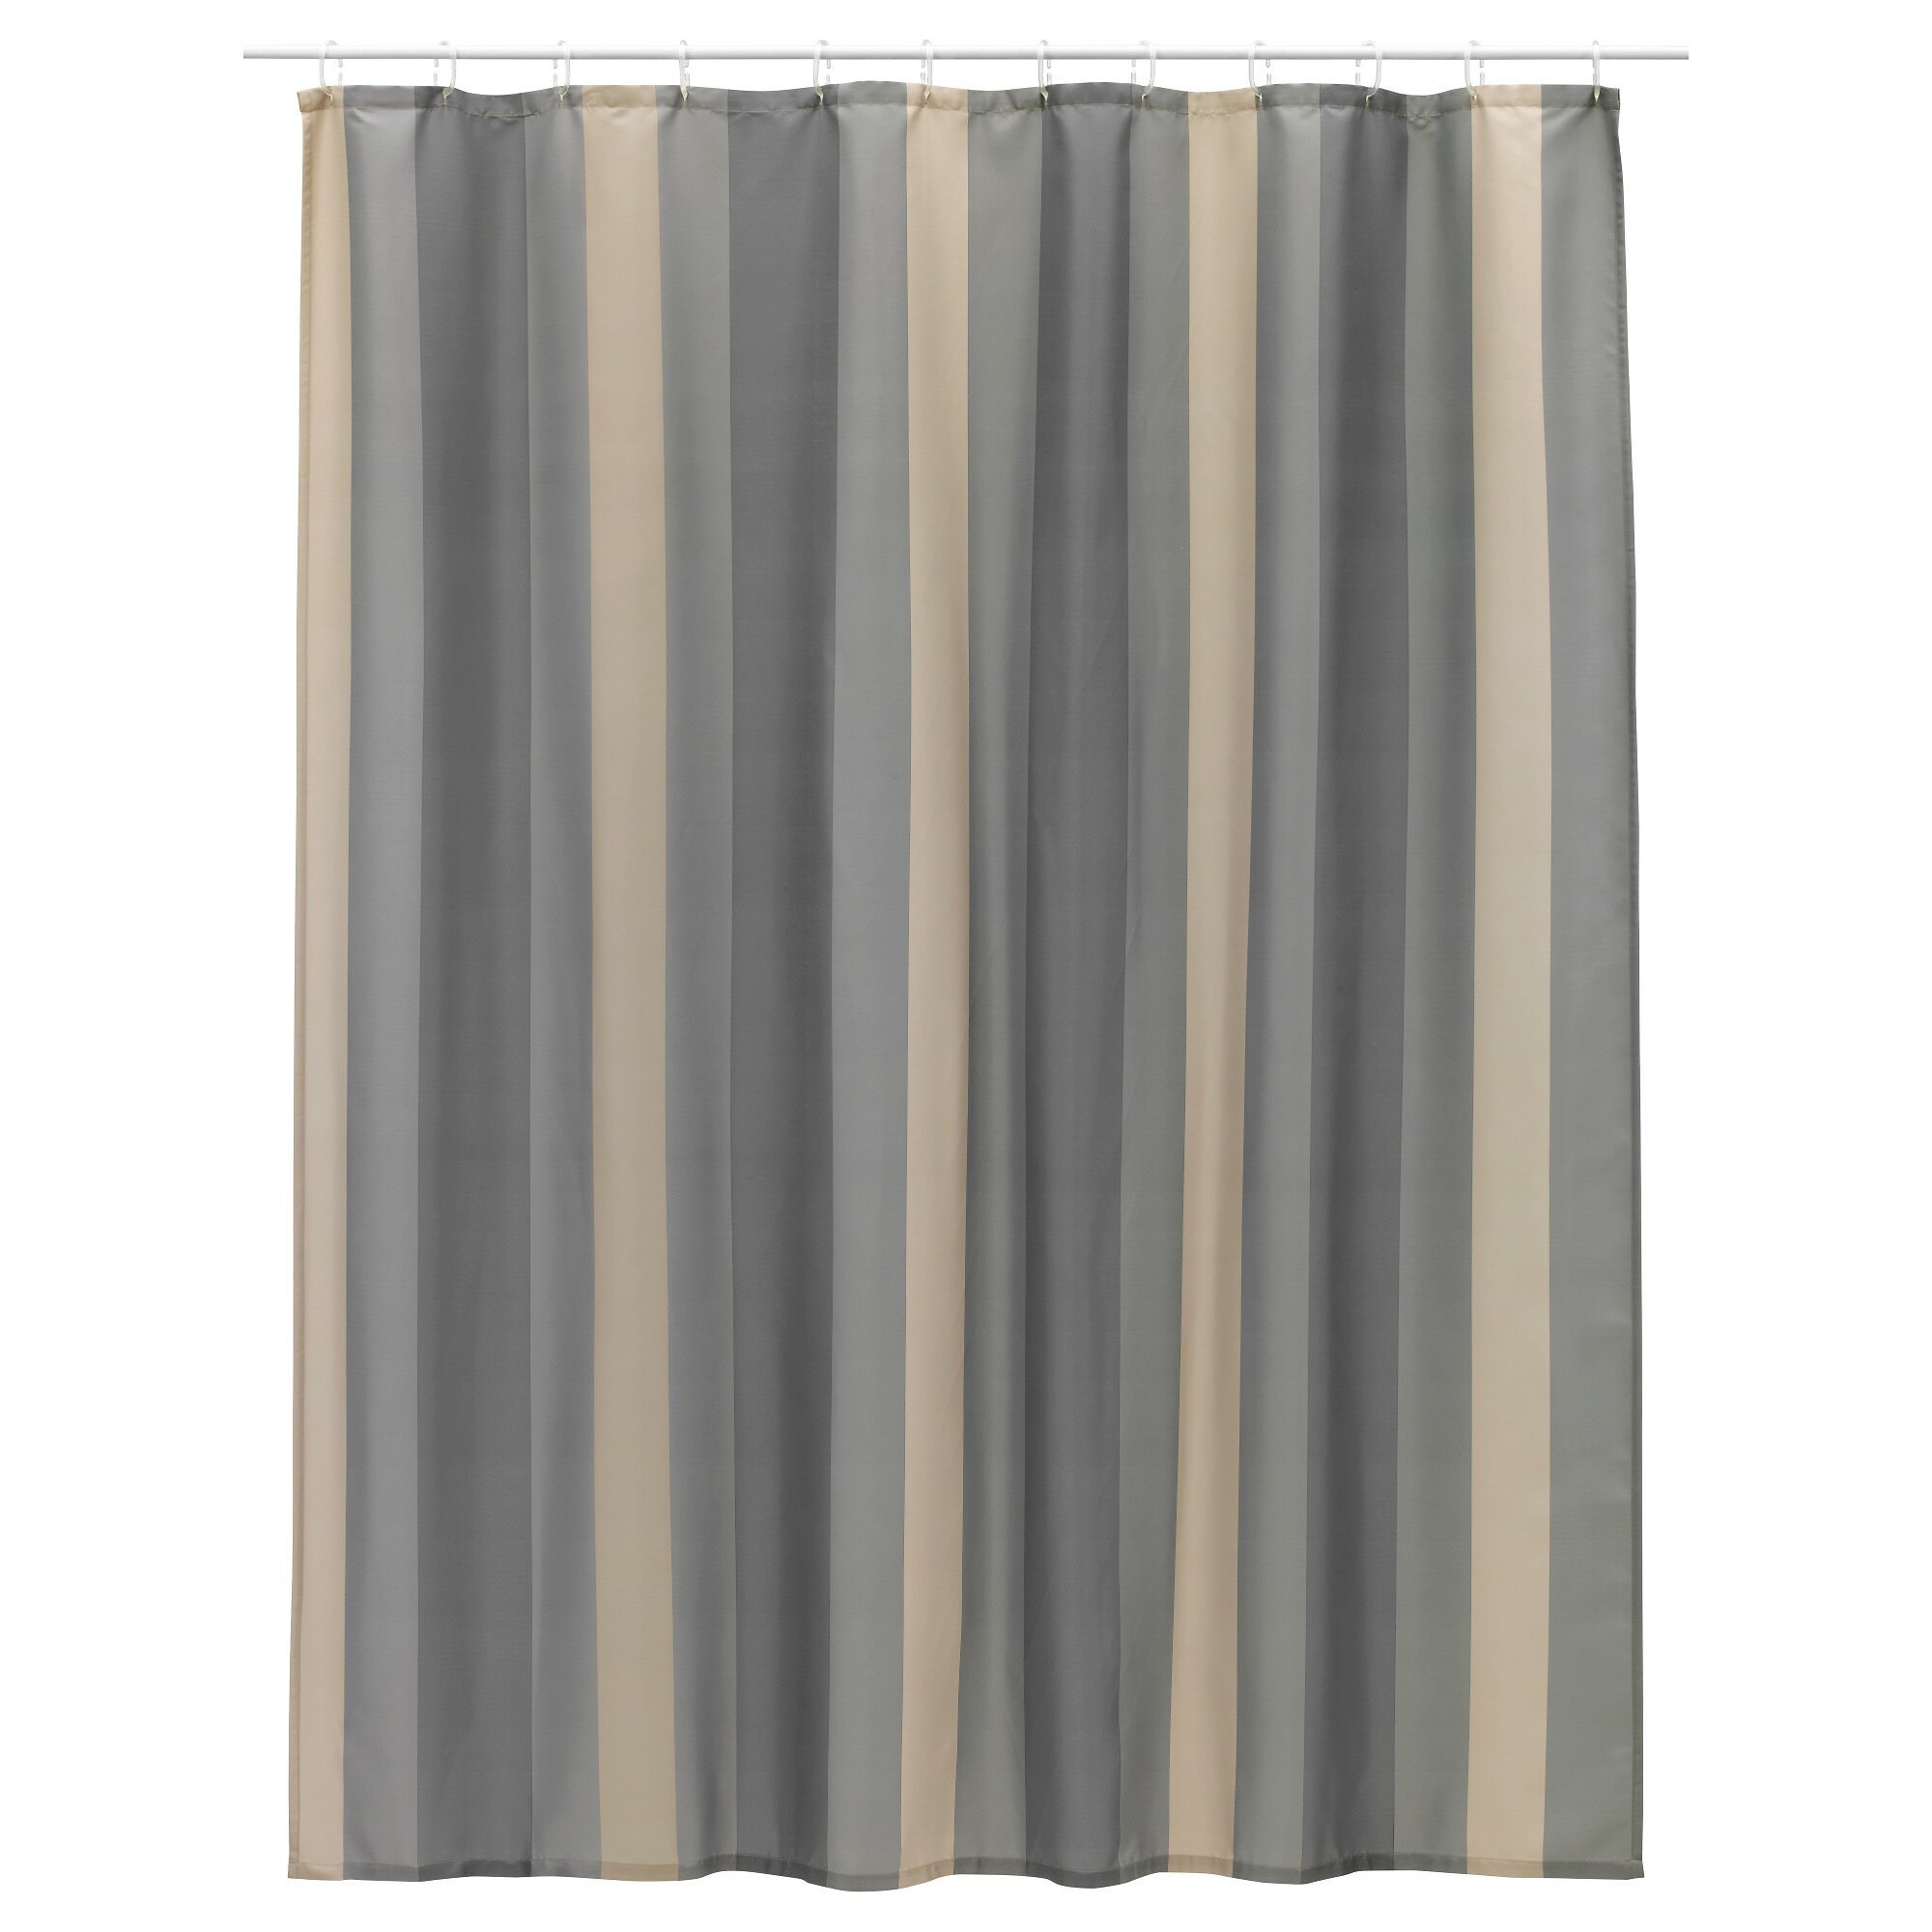 Ikea Shower Curtain for Best Your Bathroom Decoration: Flower Shower Curtain | Ikea Shower Curtain | Pocket Shower Curtain